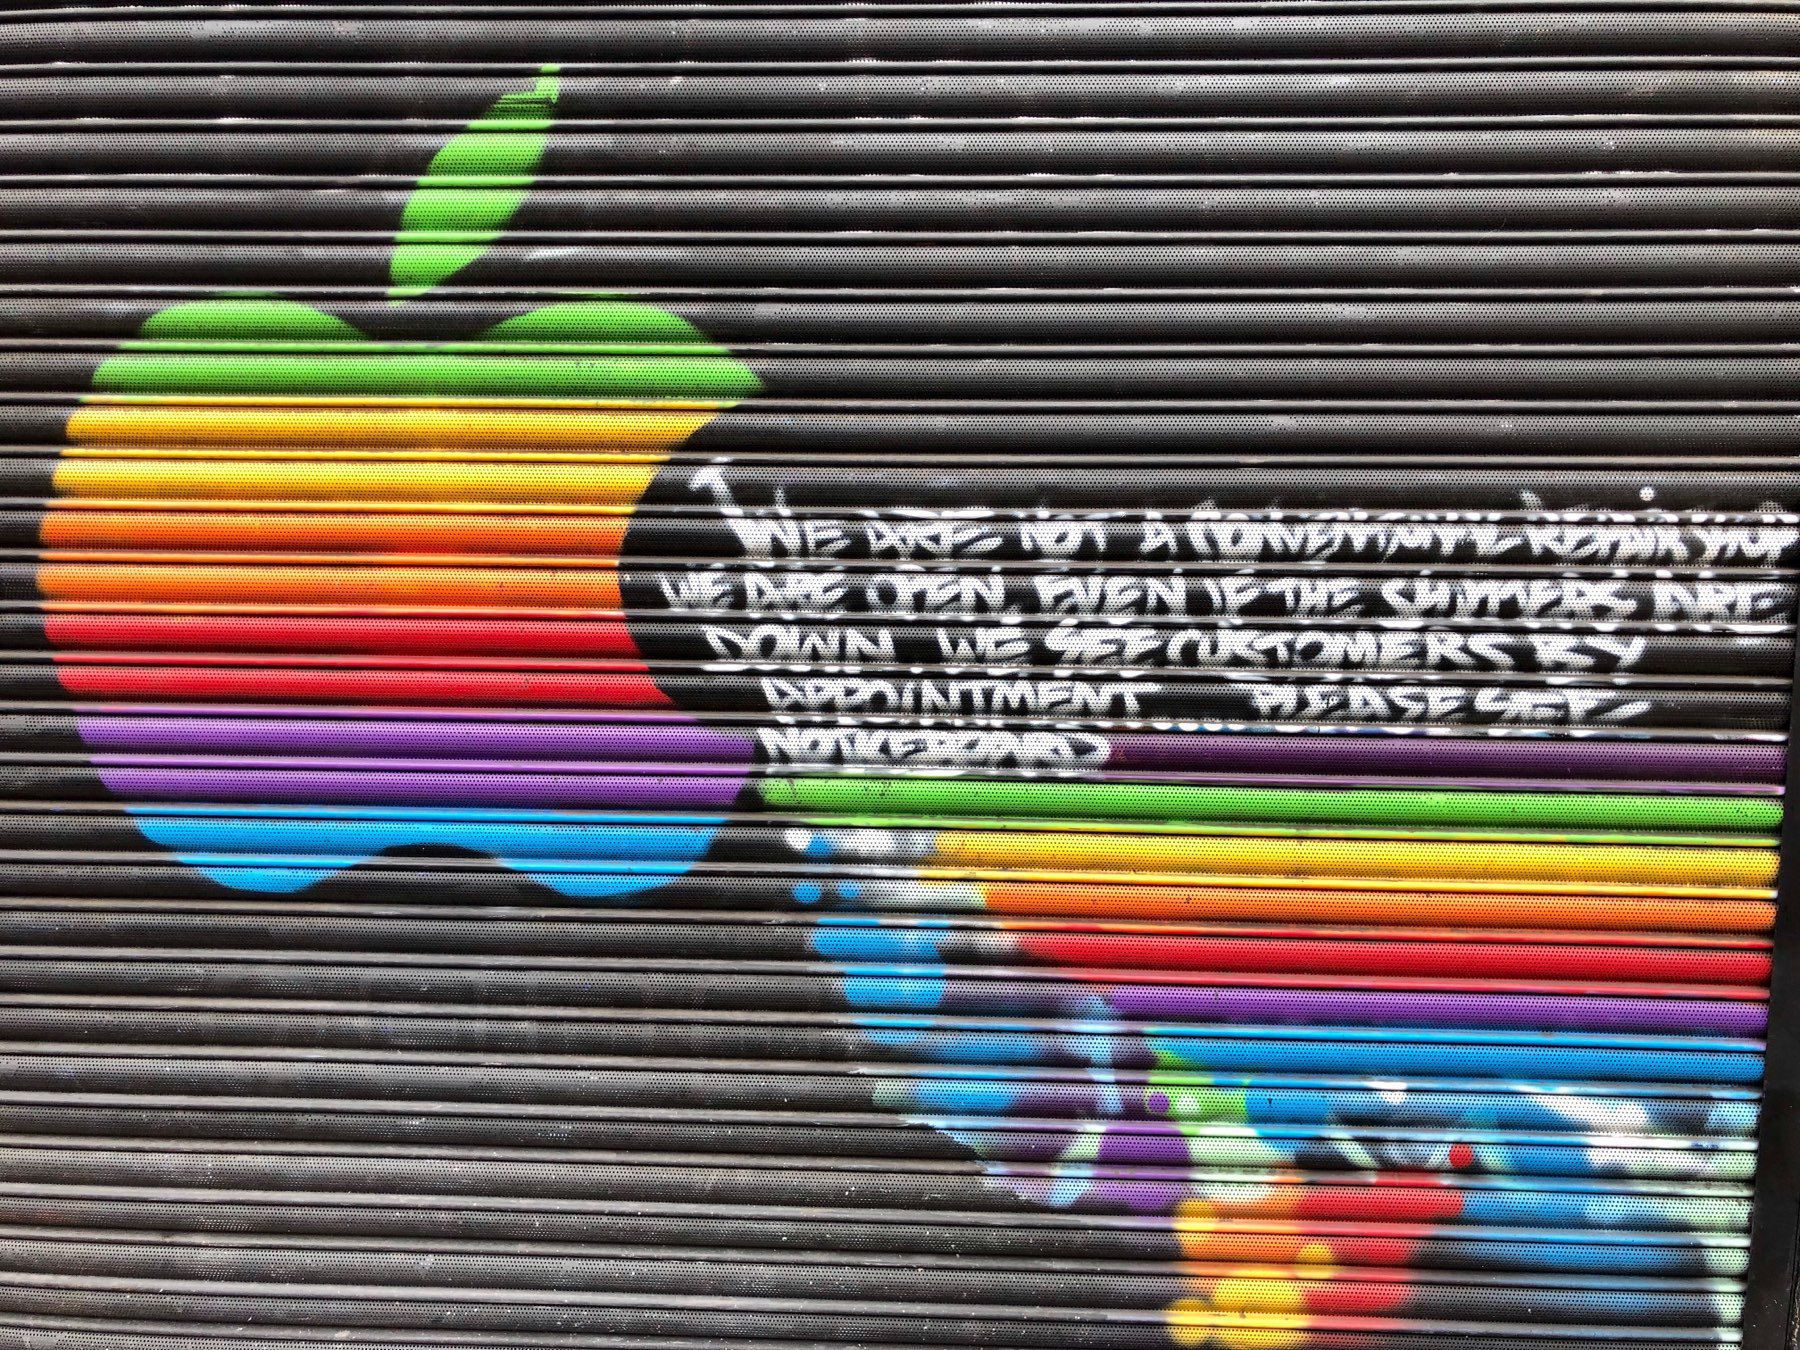 Rainbow Apple logo on the shutters of a shop in Islington, London